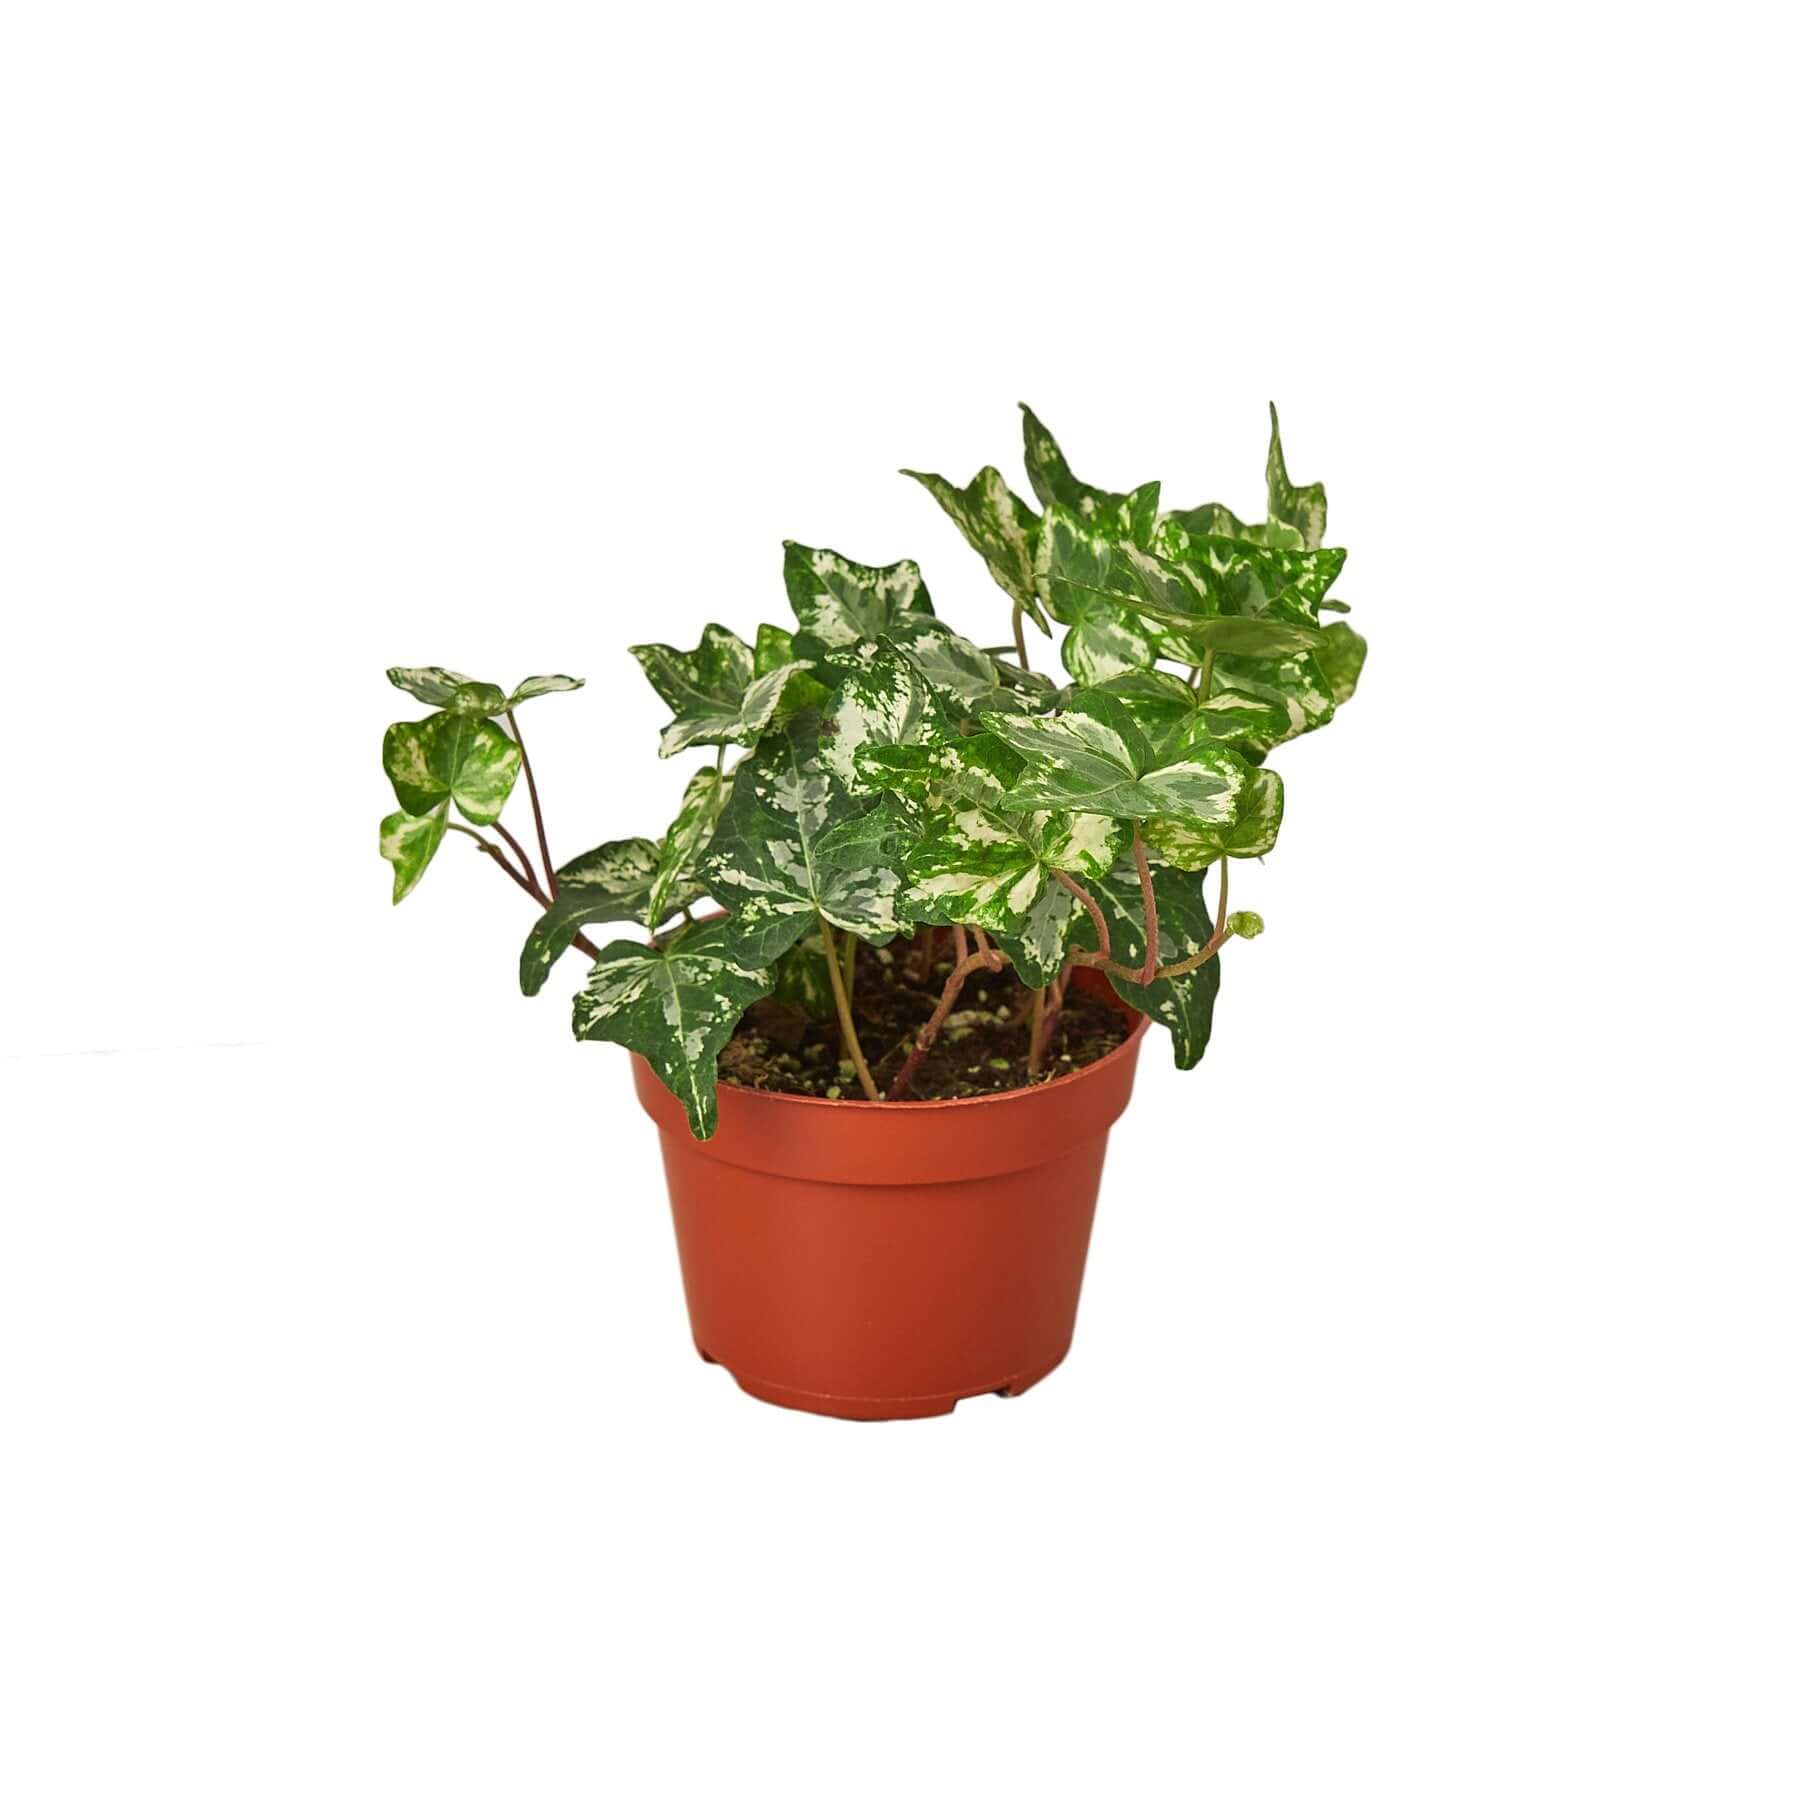 English Ivy - Kolibre | Modern house plants that clean the air